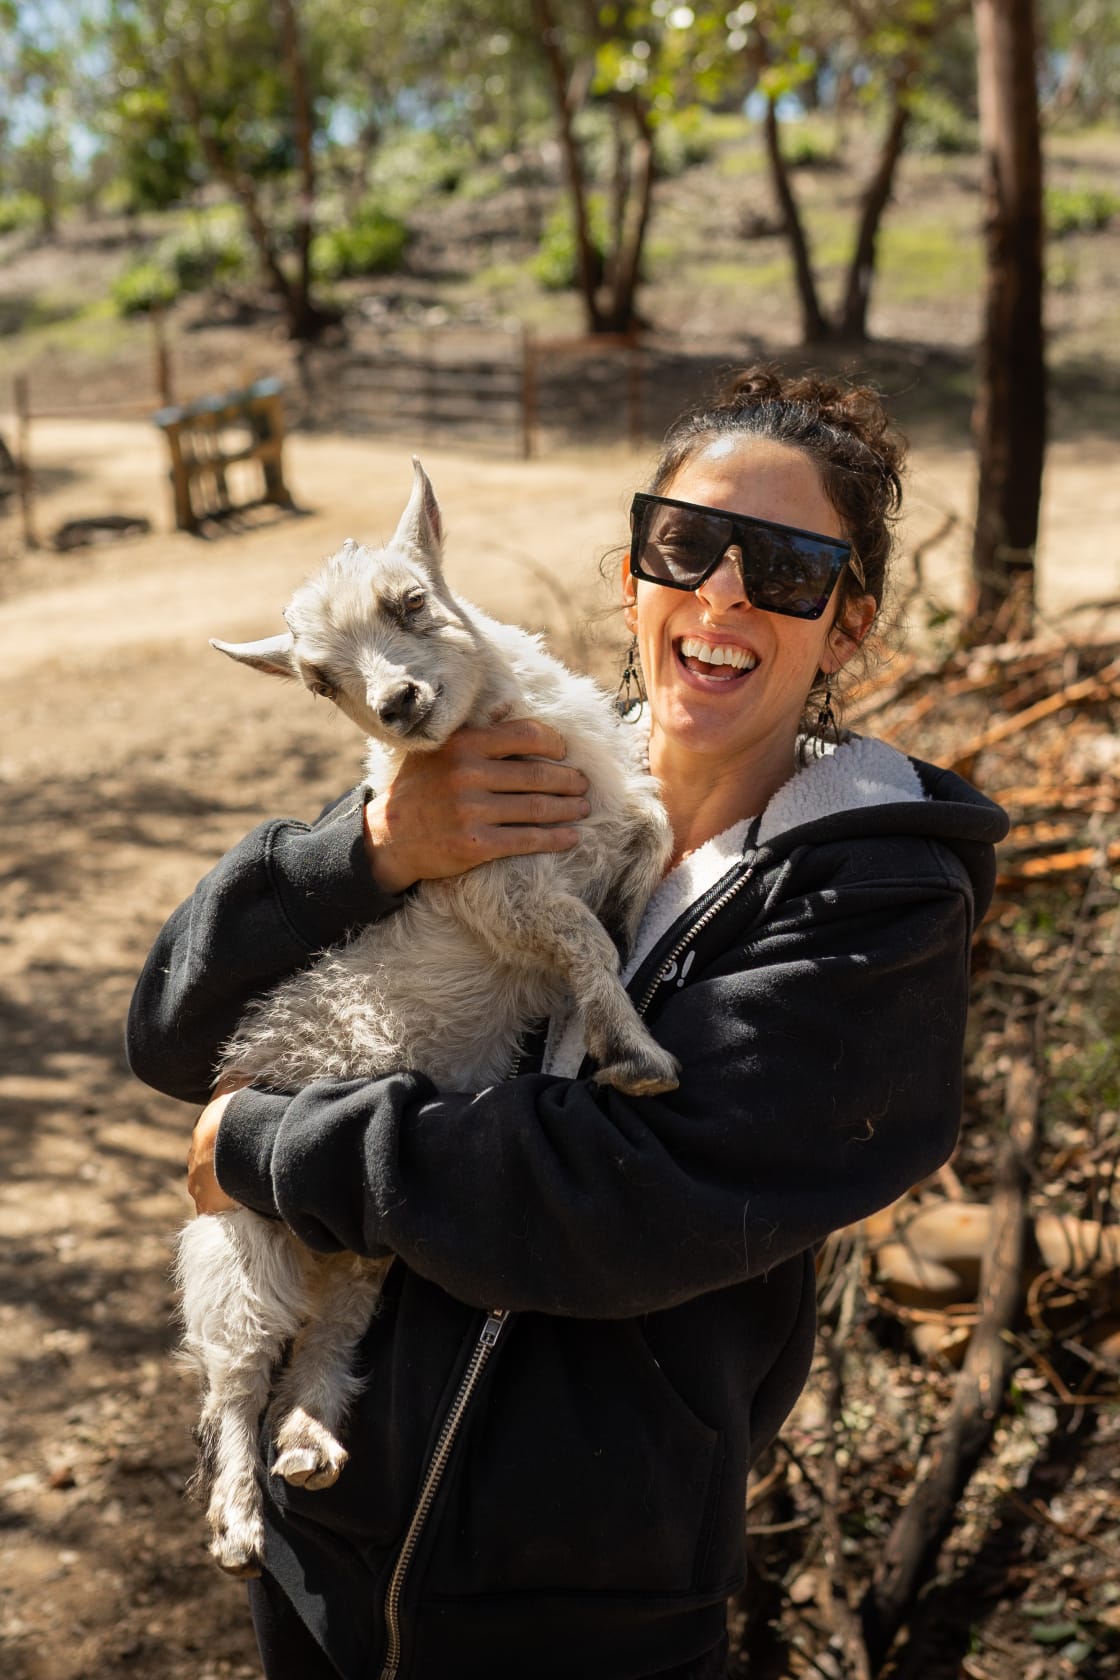 Karina (host) and her pygmy goat